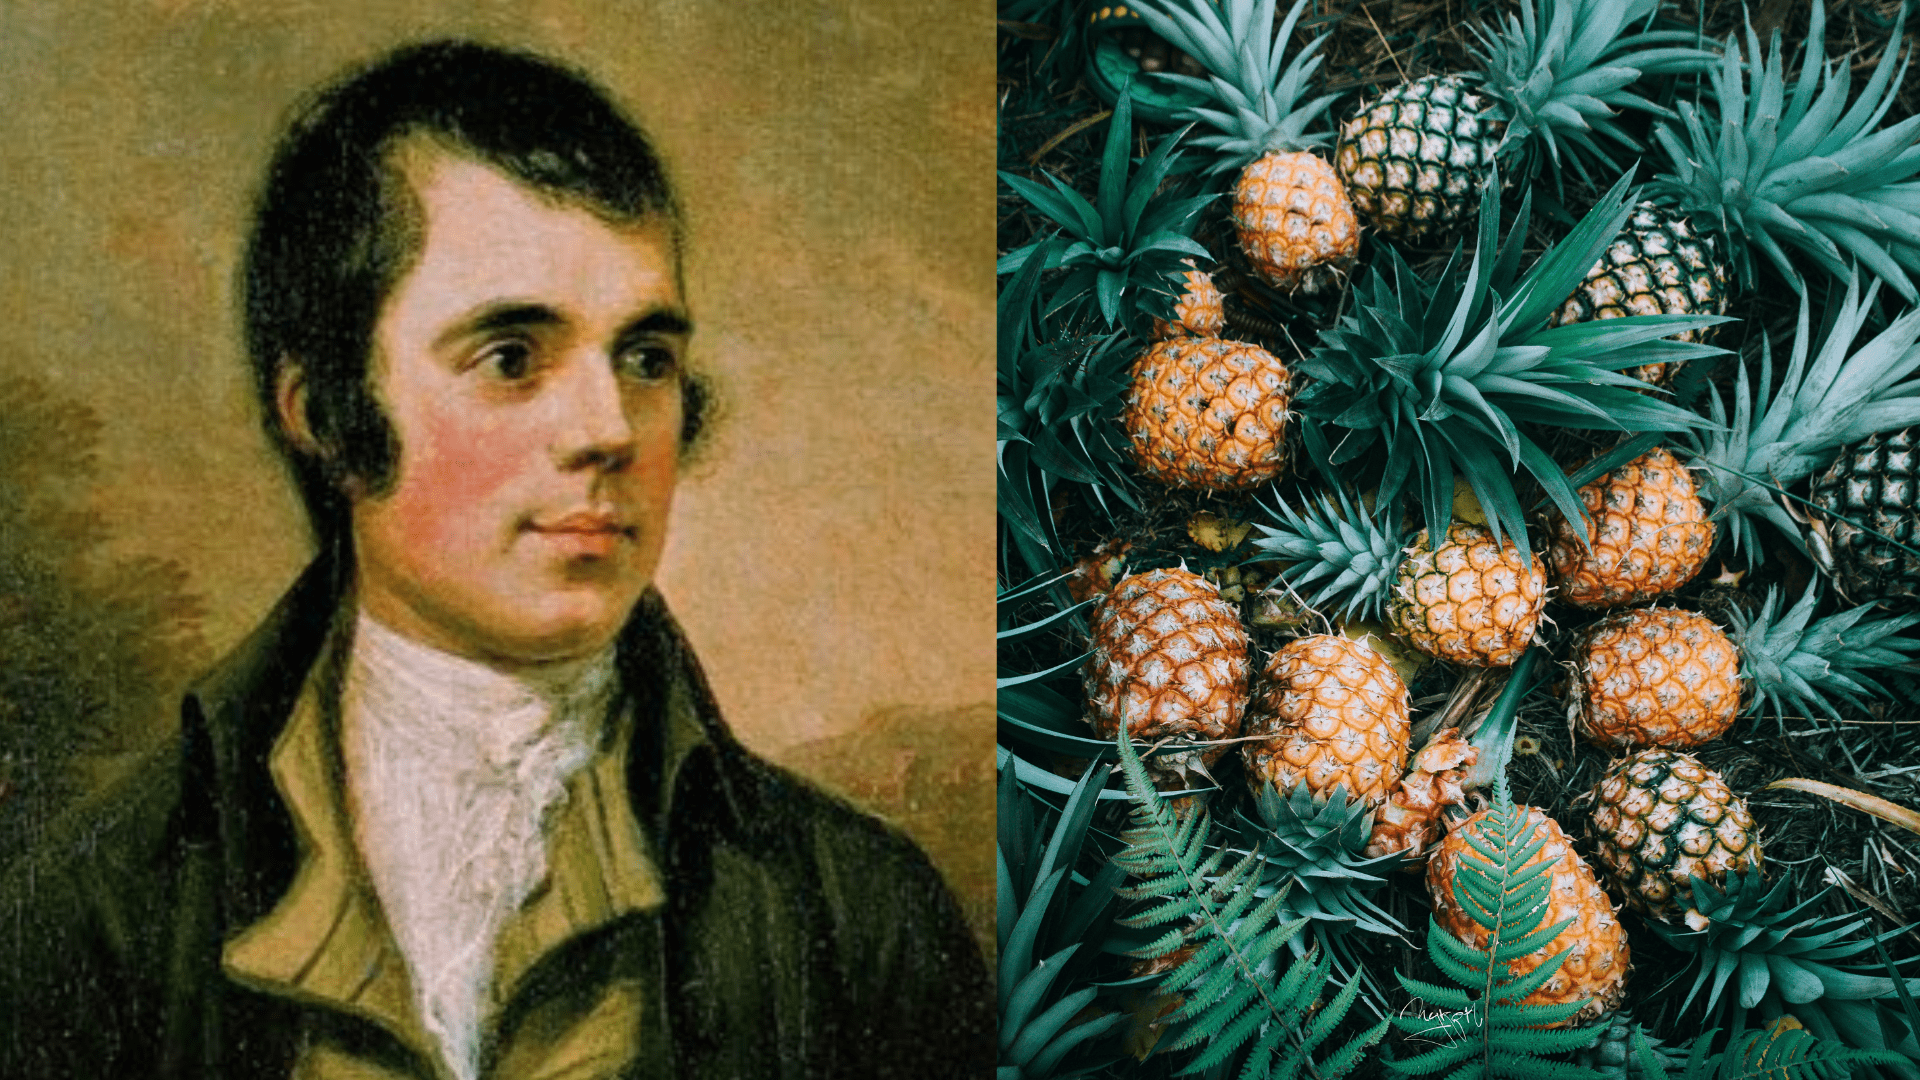 Robert Burns & The Royal History of Pineapples